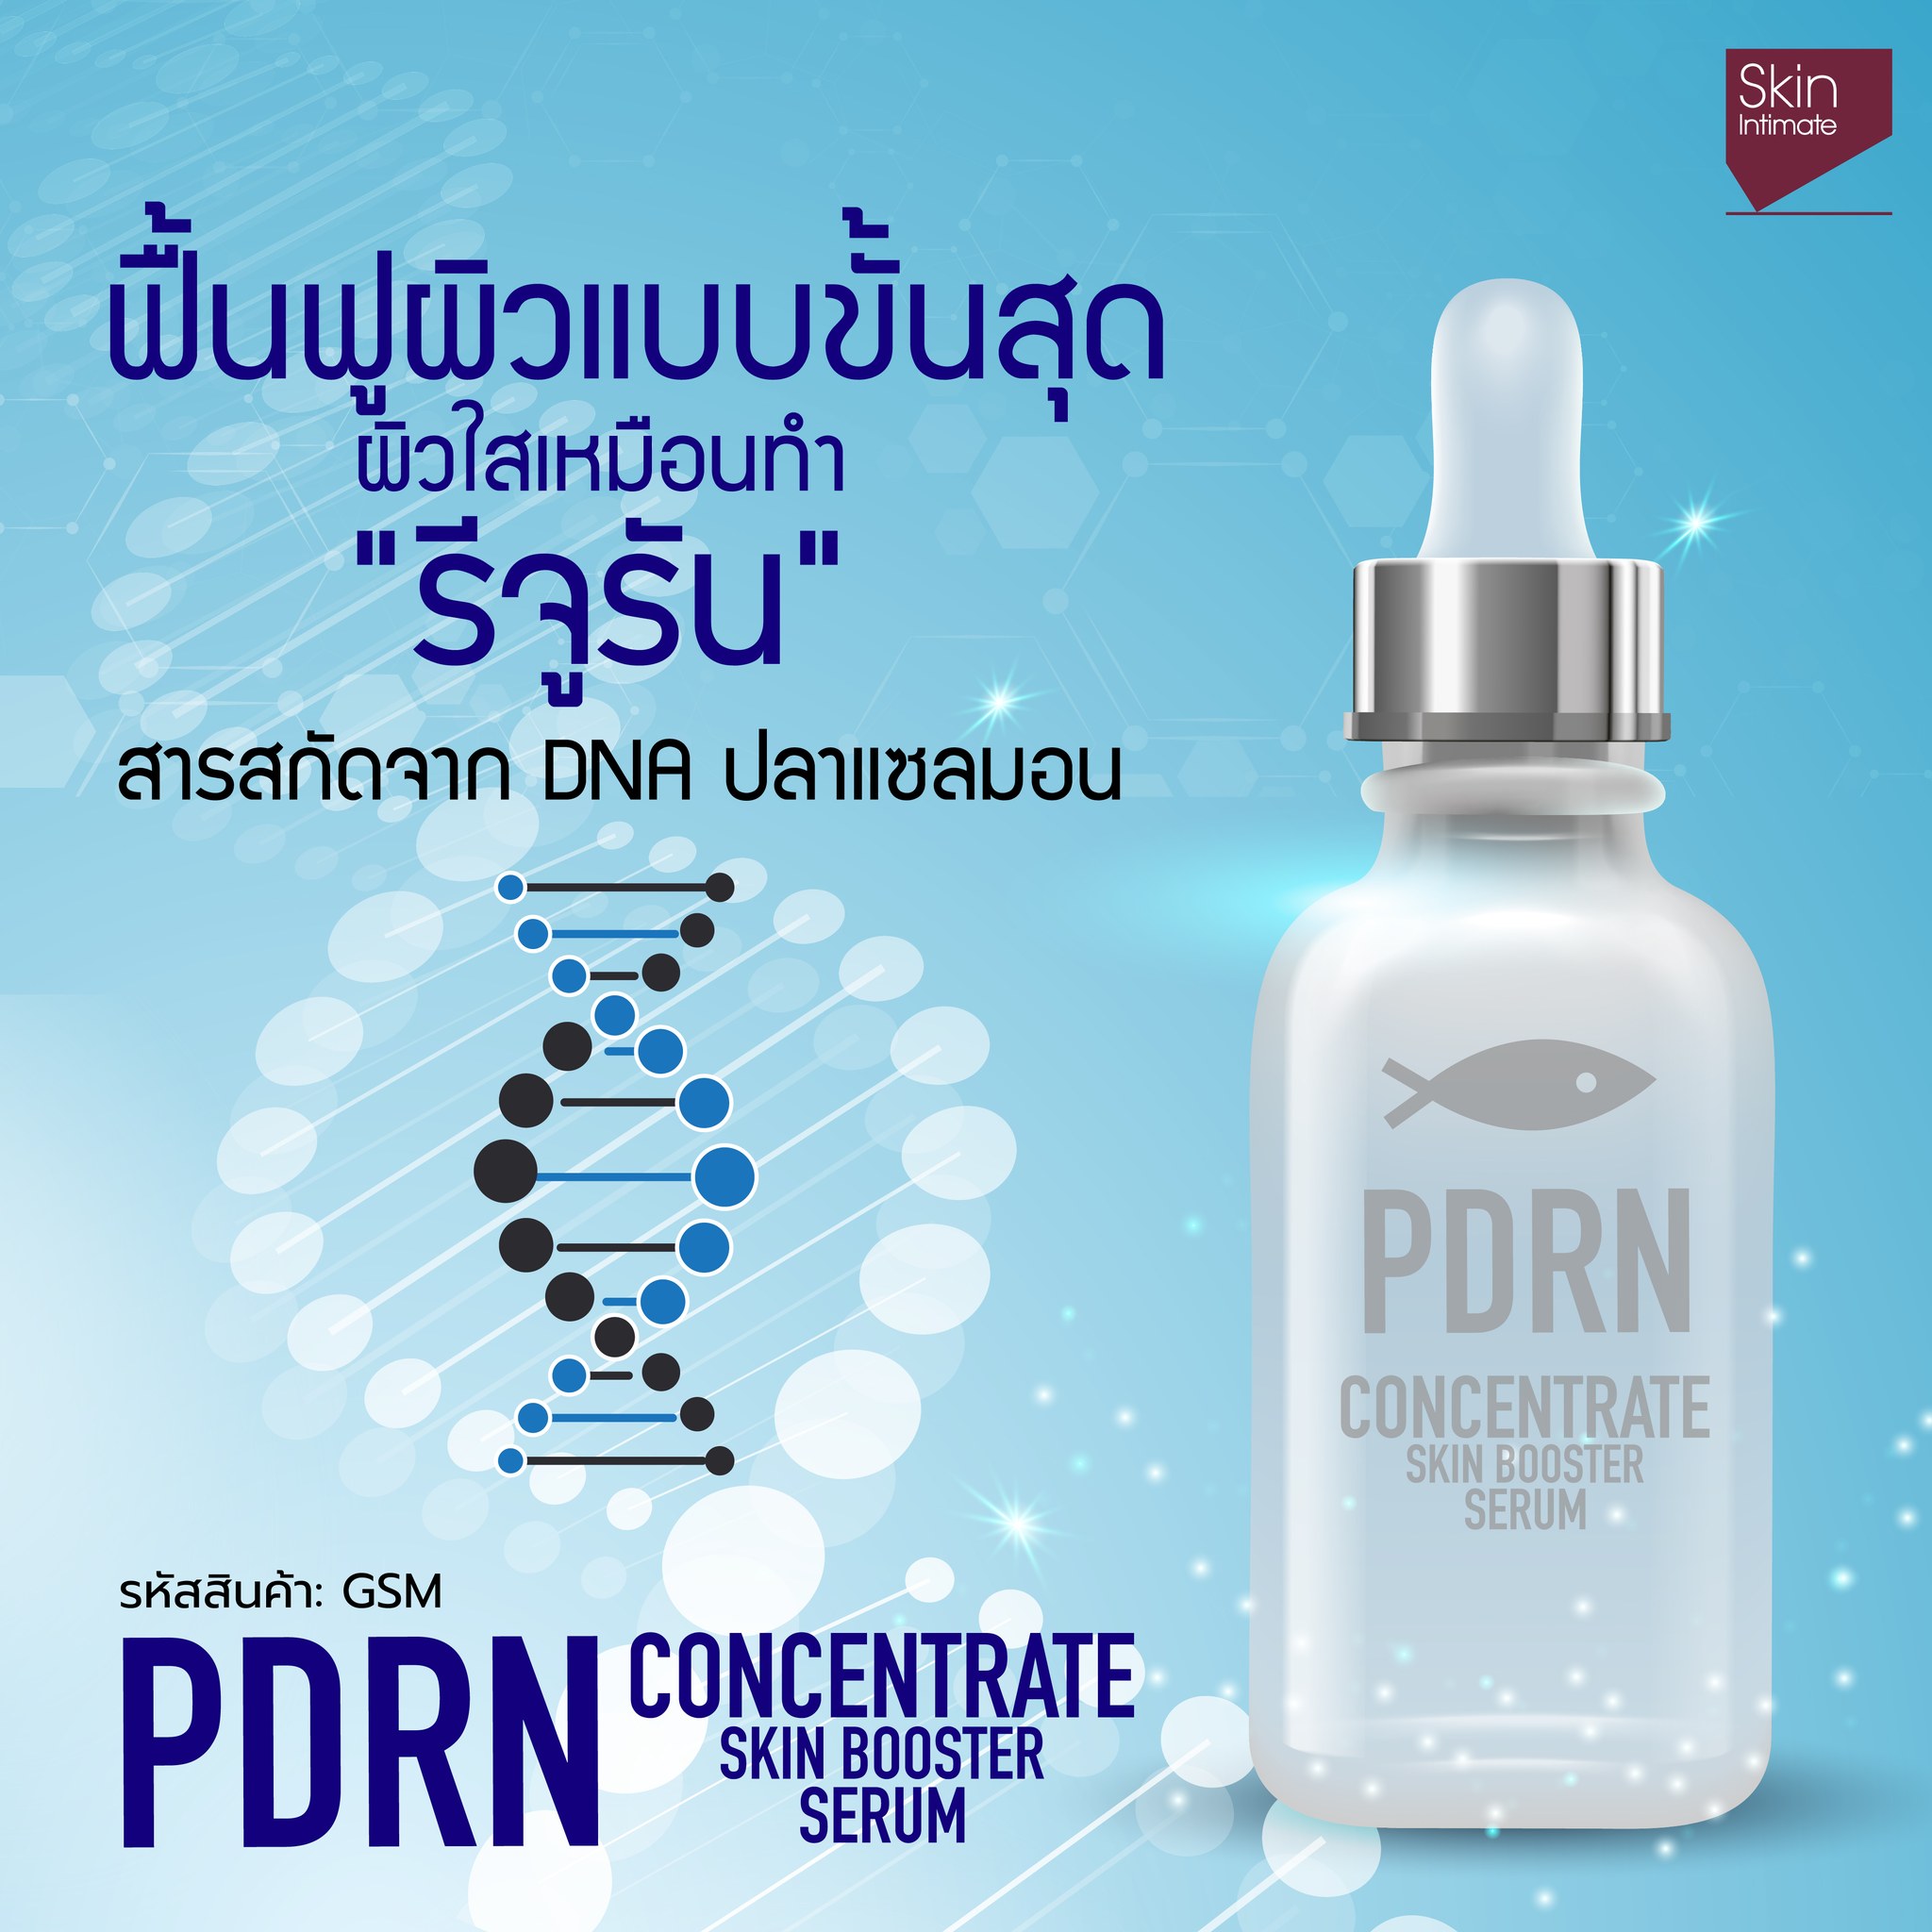 skin-intimate, Concentrate Skin Booster Serum